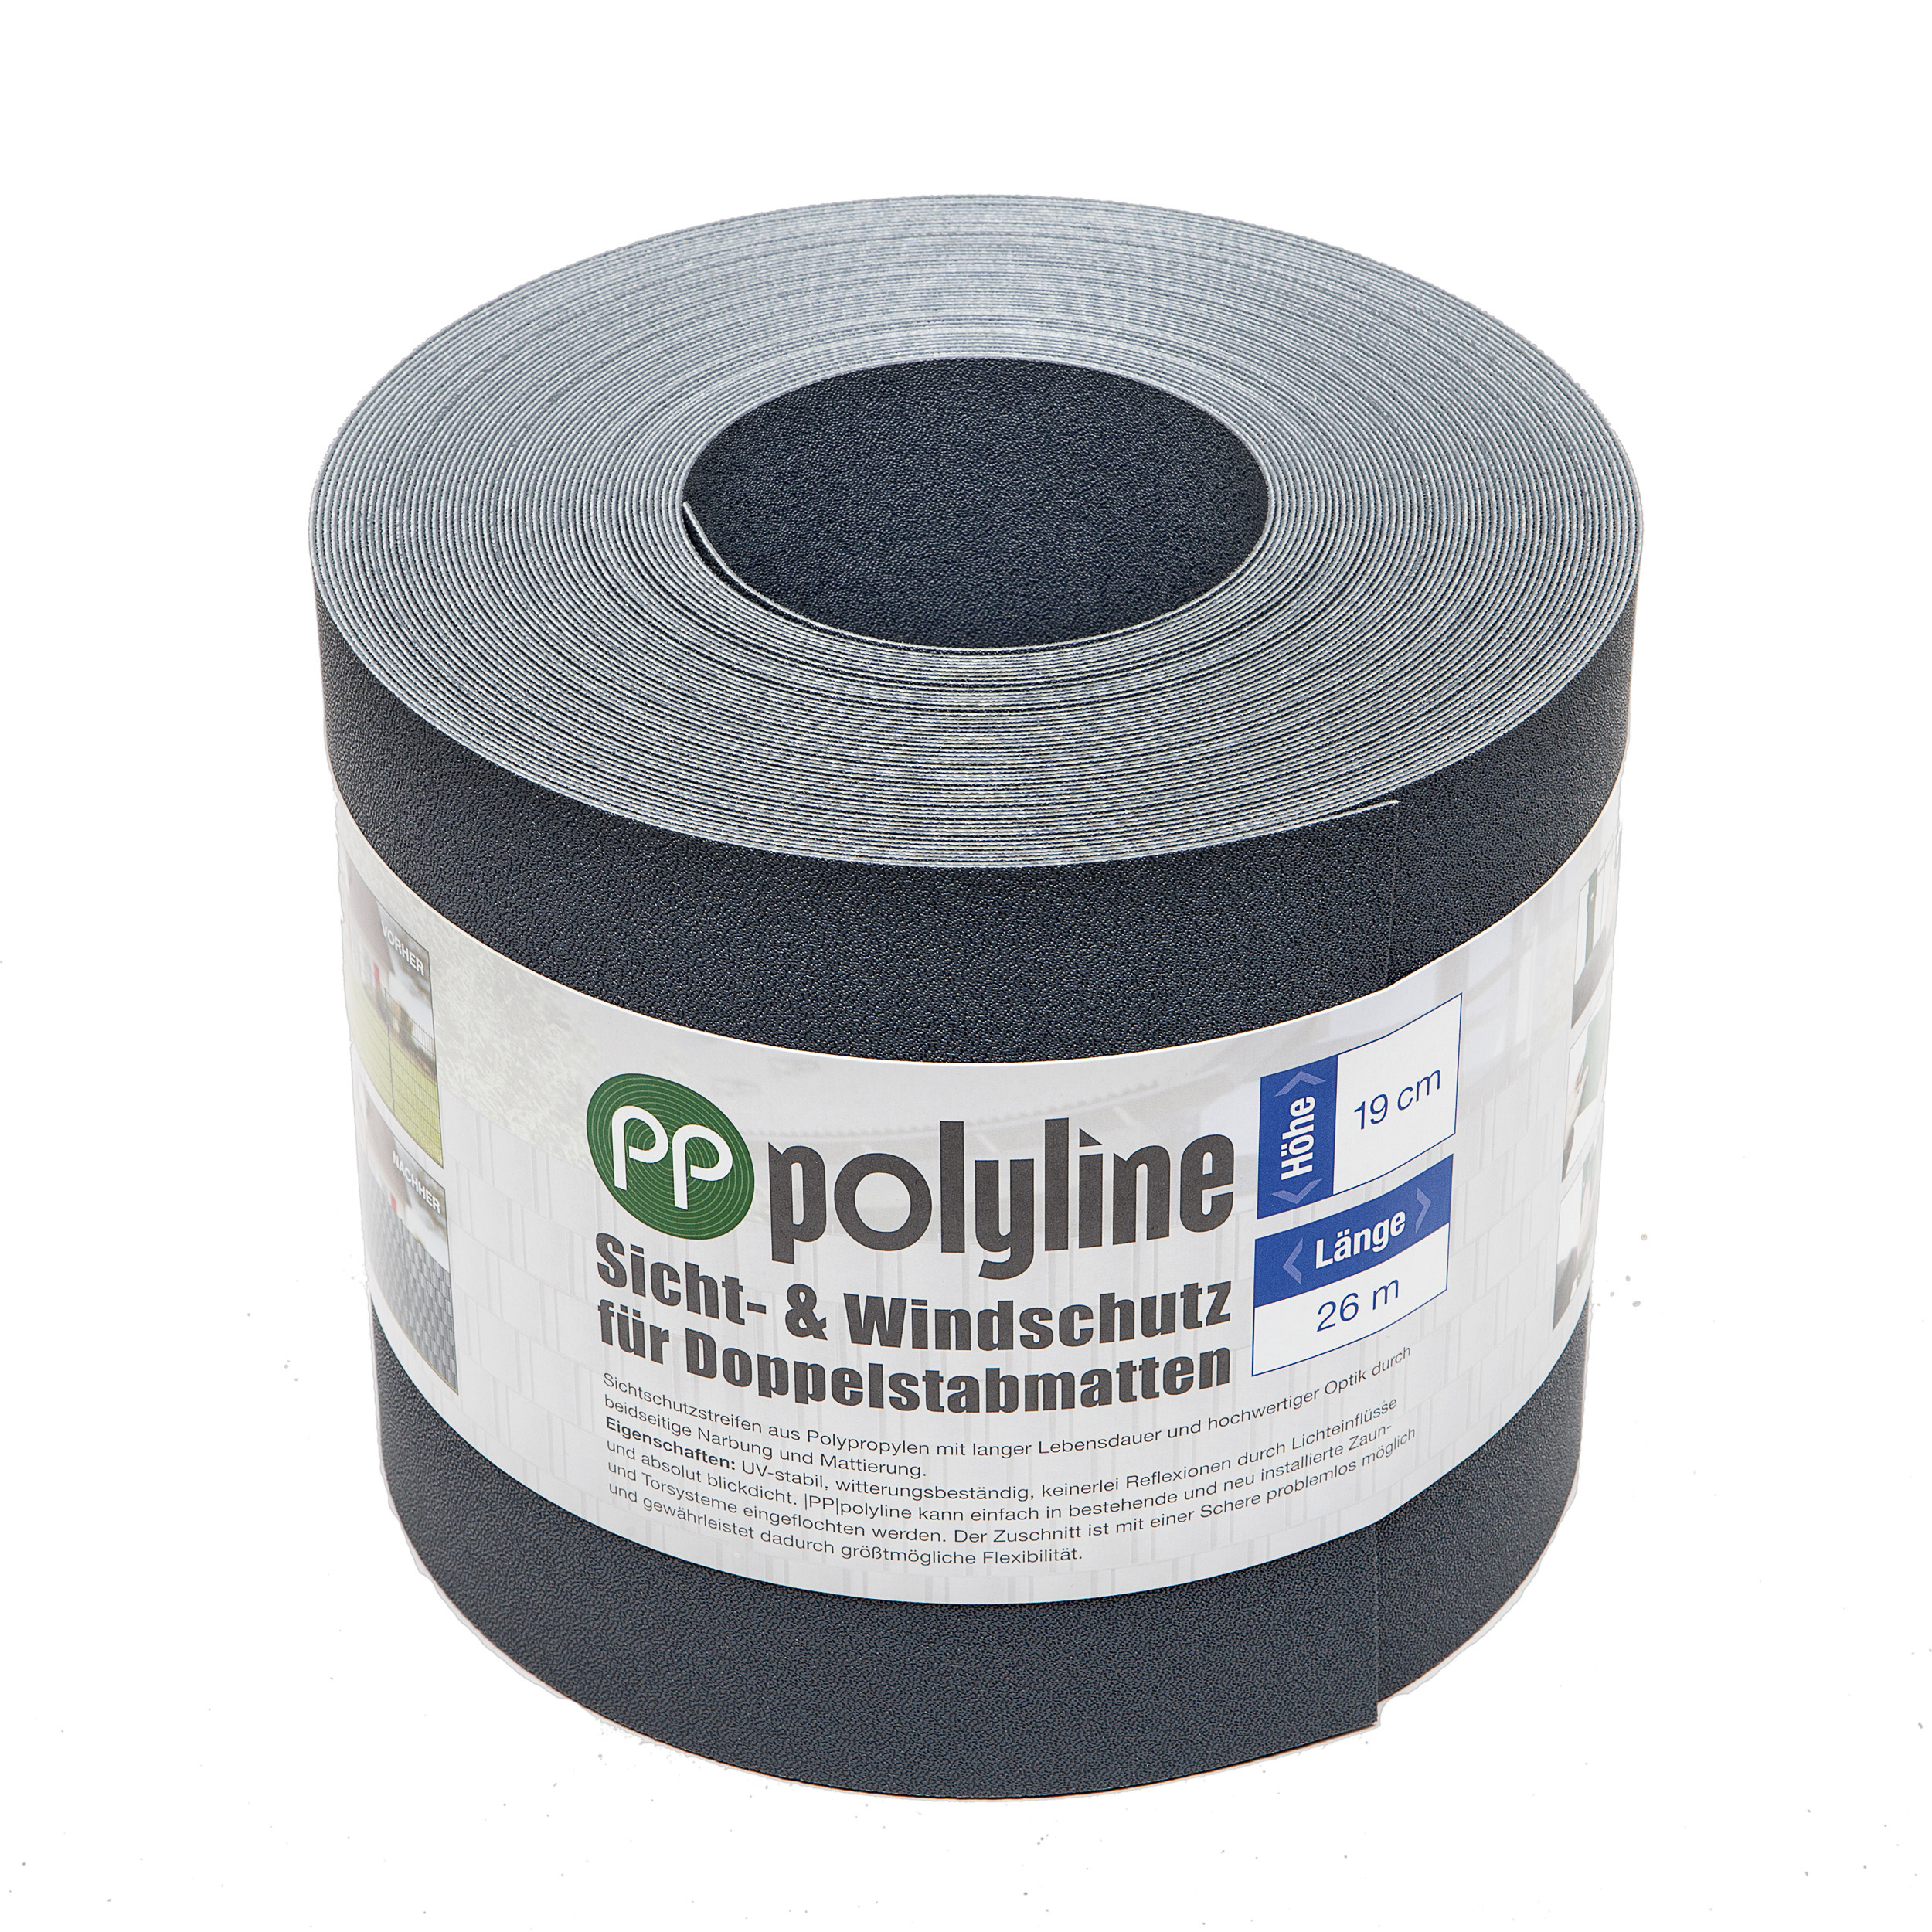  |PP| polyline / Rolle anthrazit 26 m